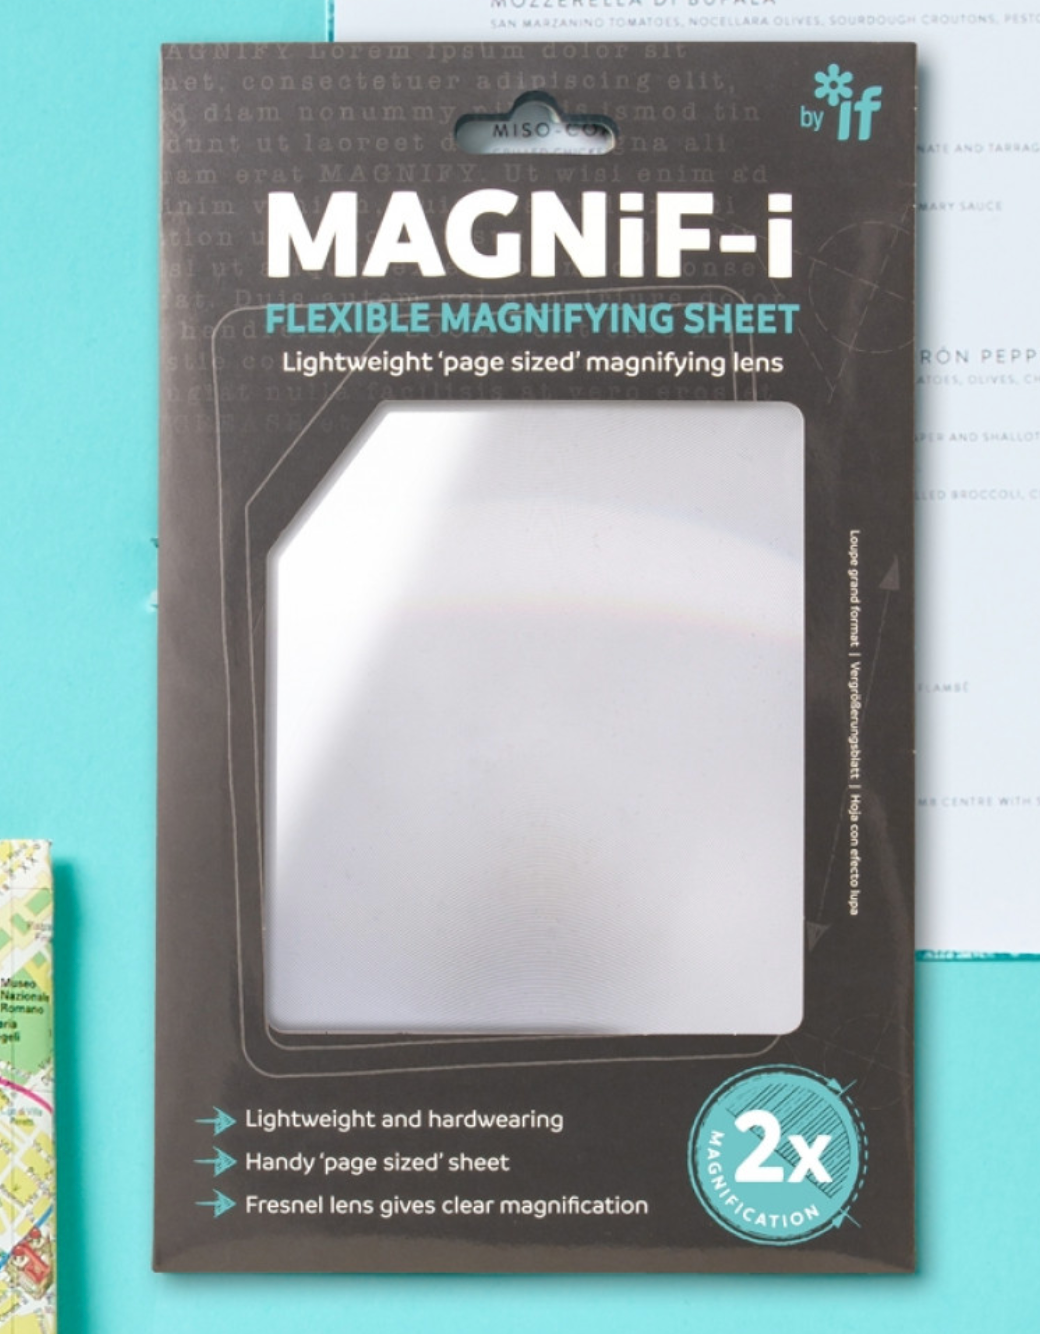 Magnif-i 5x7 Magnifier Sheet